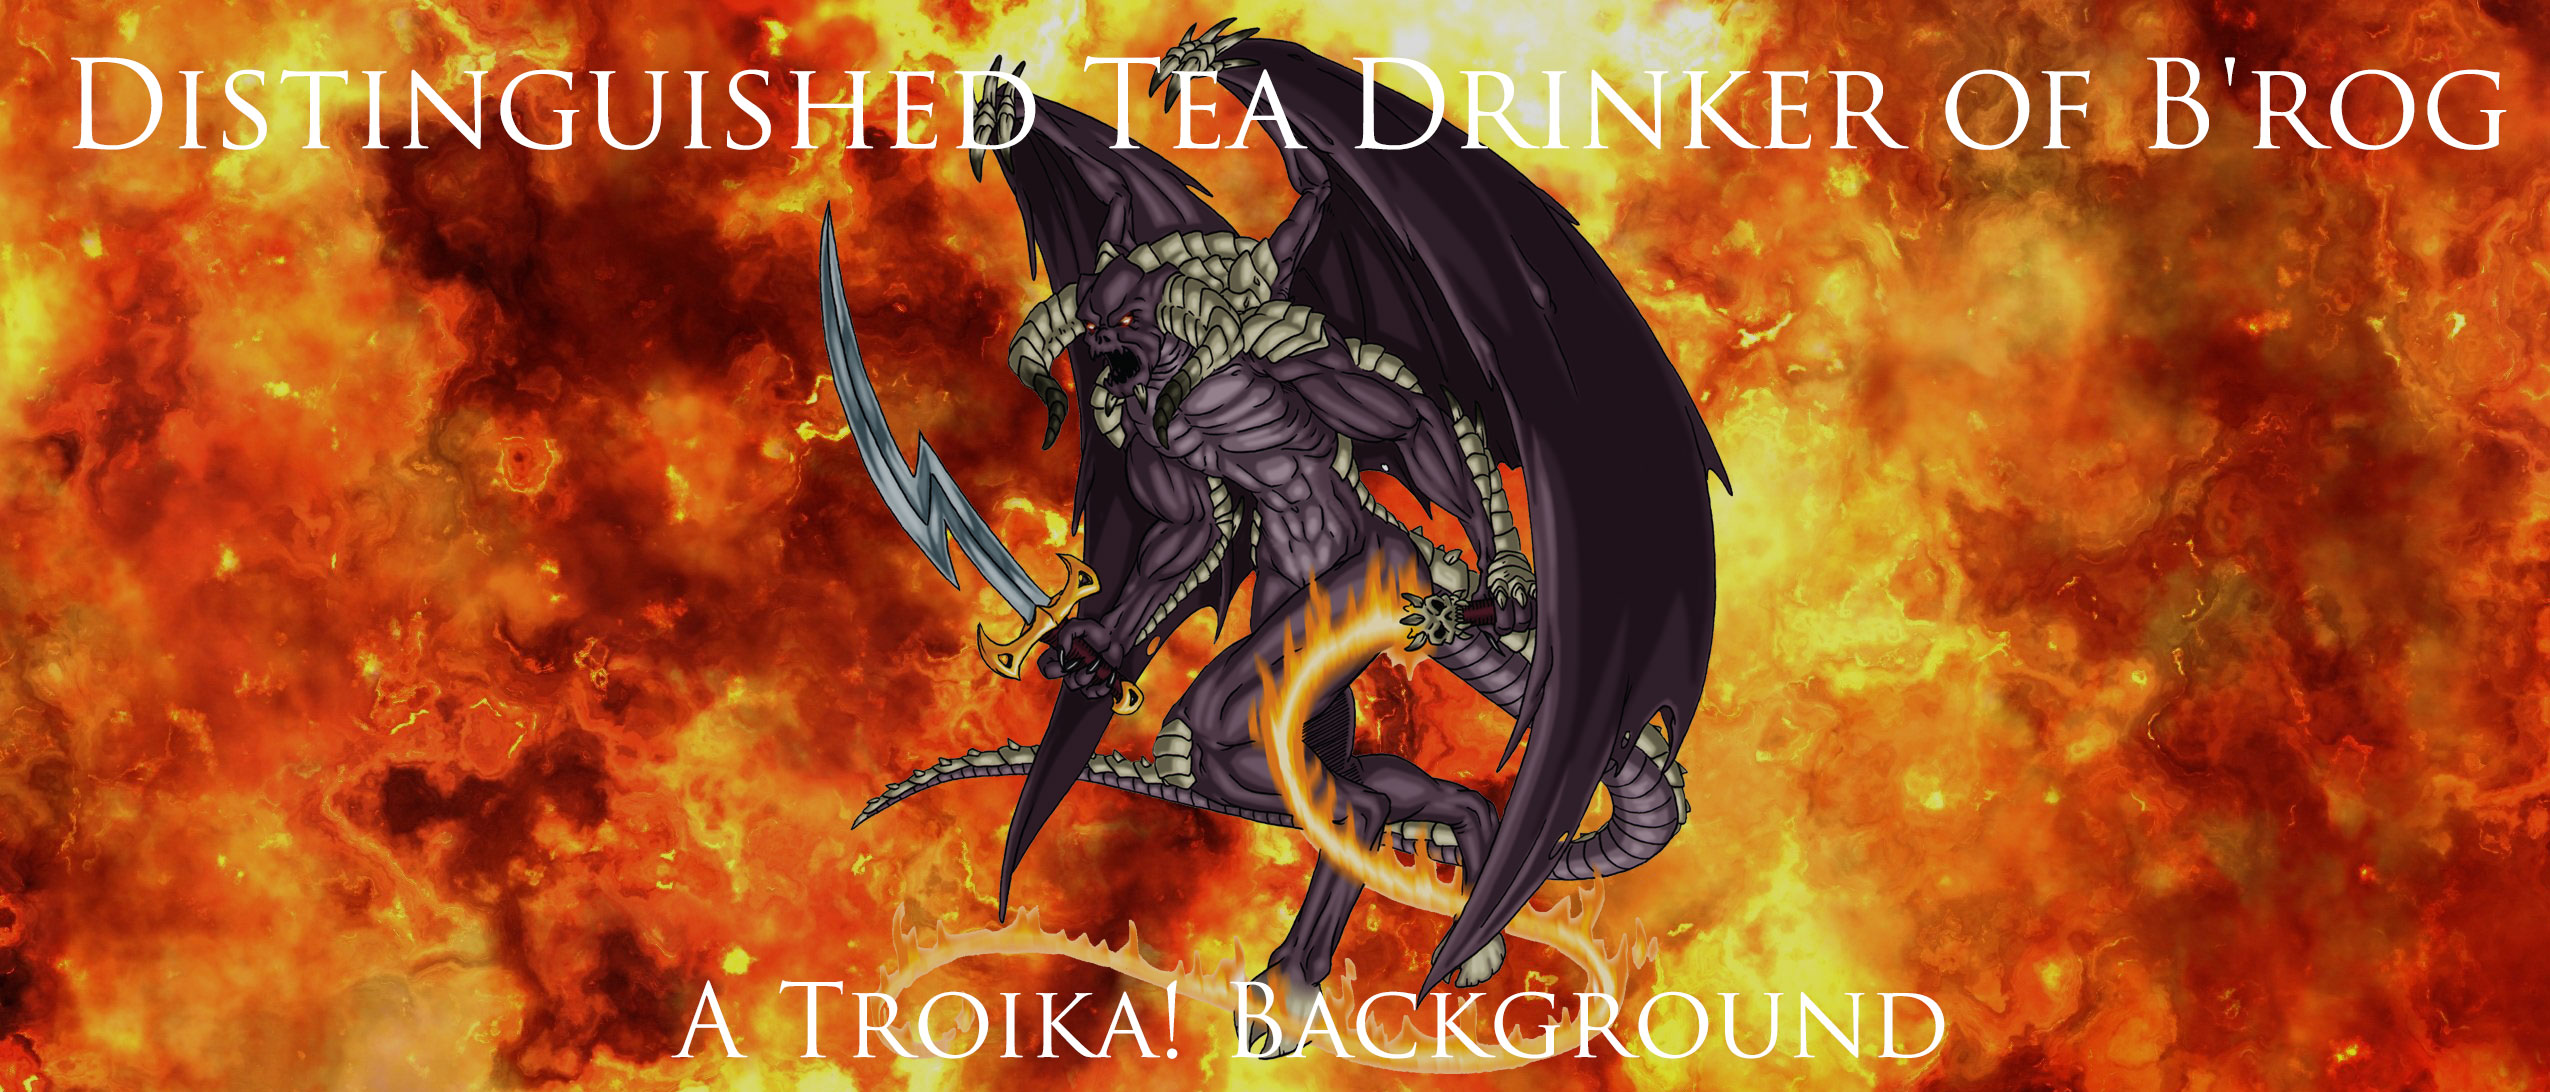 Distinguished Tea Drinker of B'rog - A Troika! Background